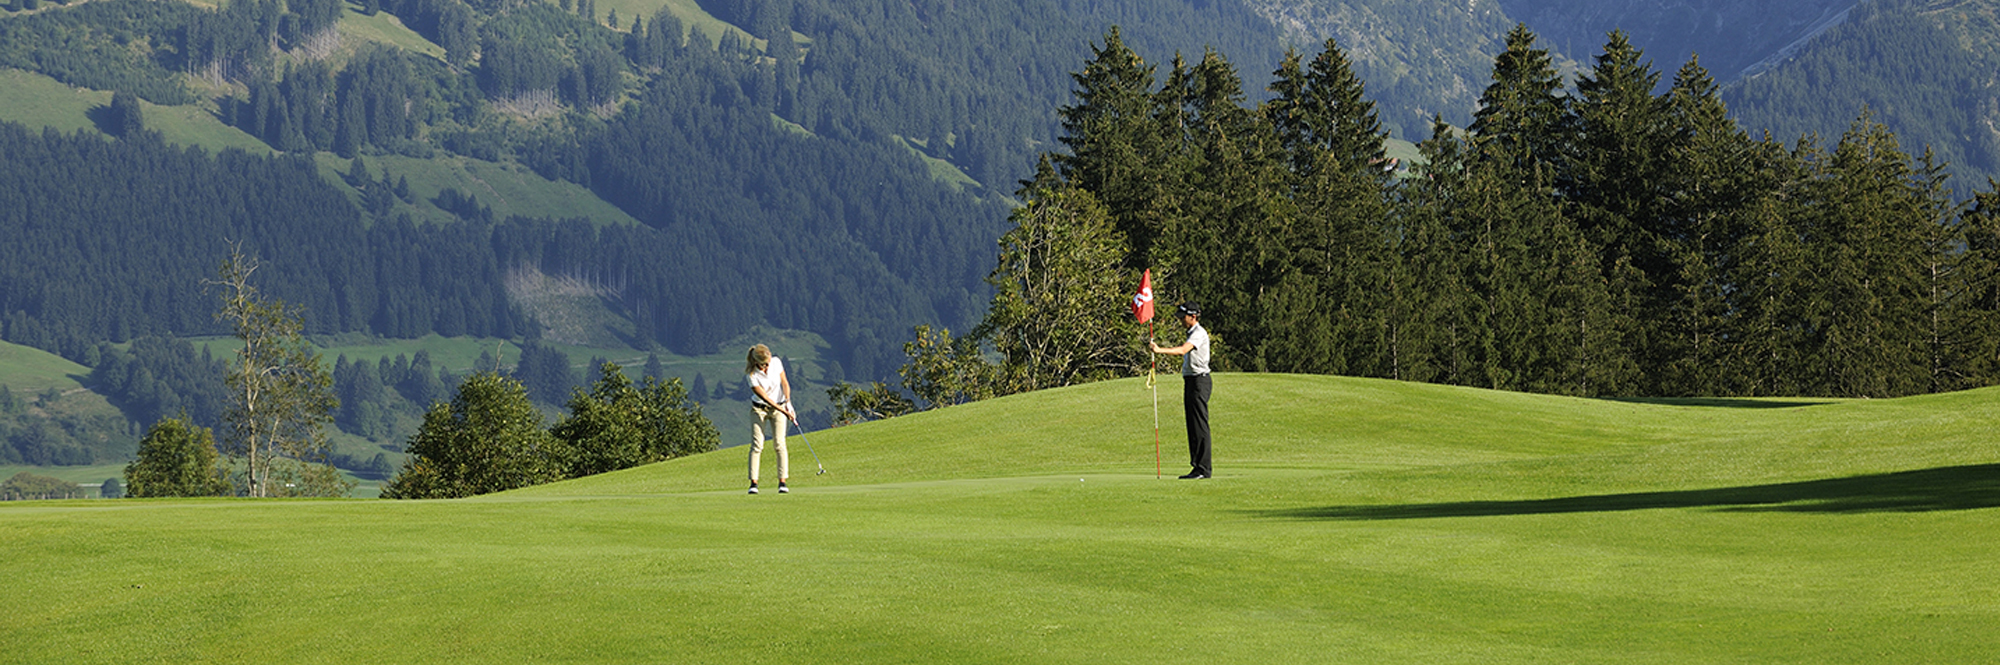 Golfurlaub im Allgäu